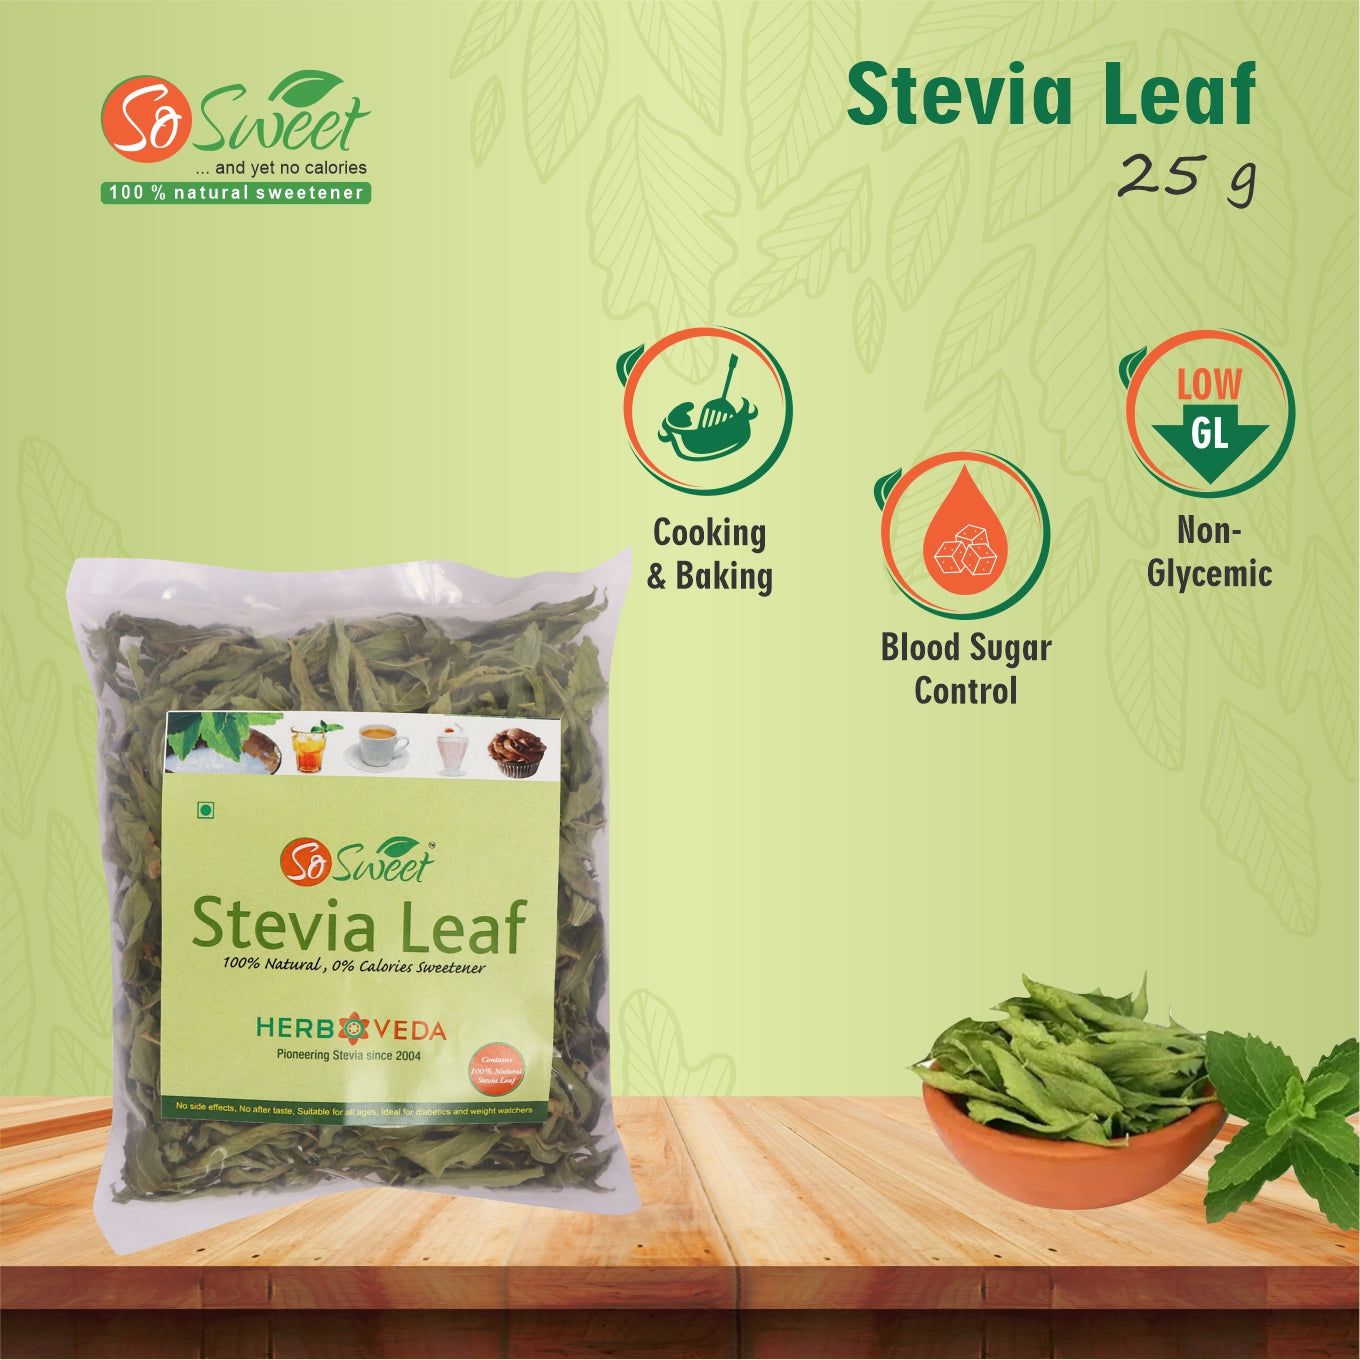 So Sweet Stevia Leaf Sugar Free Natural Zero Calorie Sweetener Pack of 4 (25gm each)